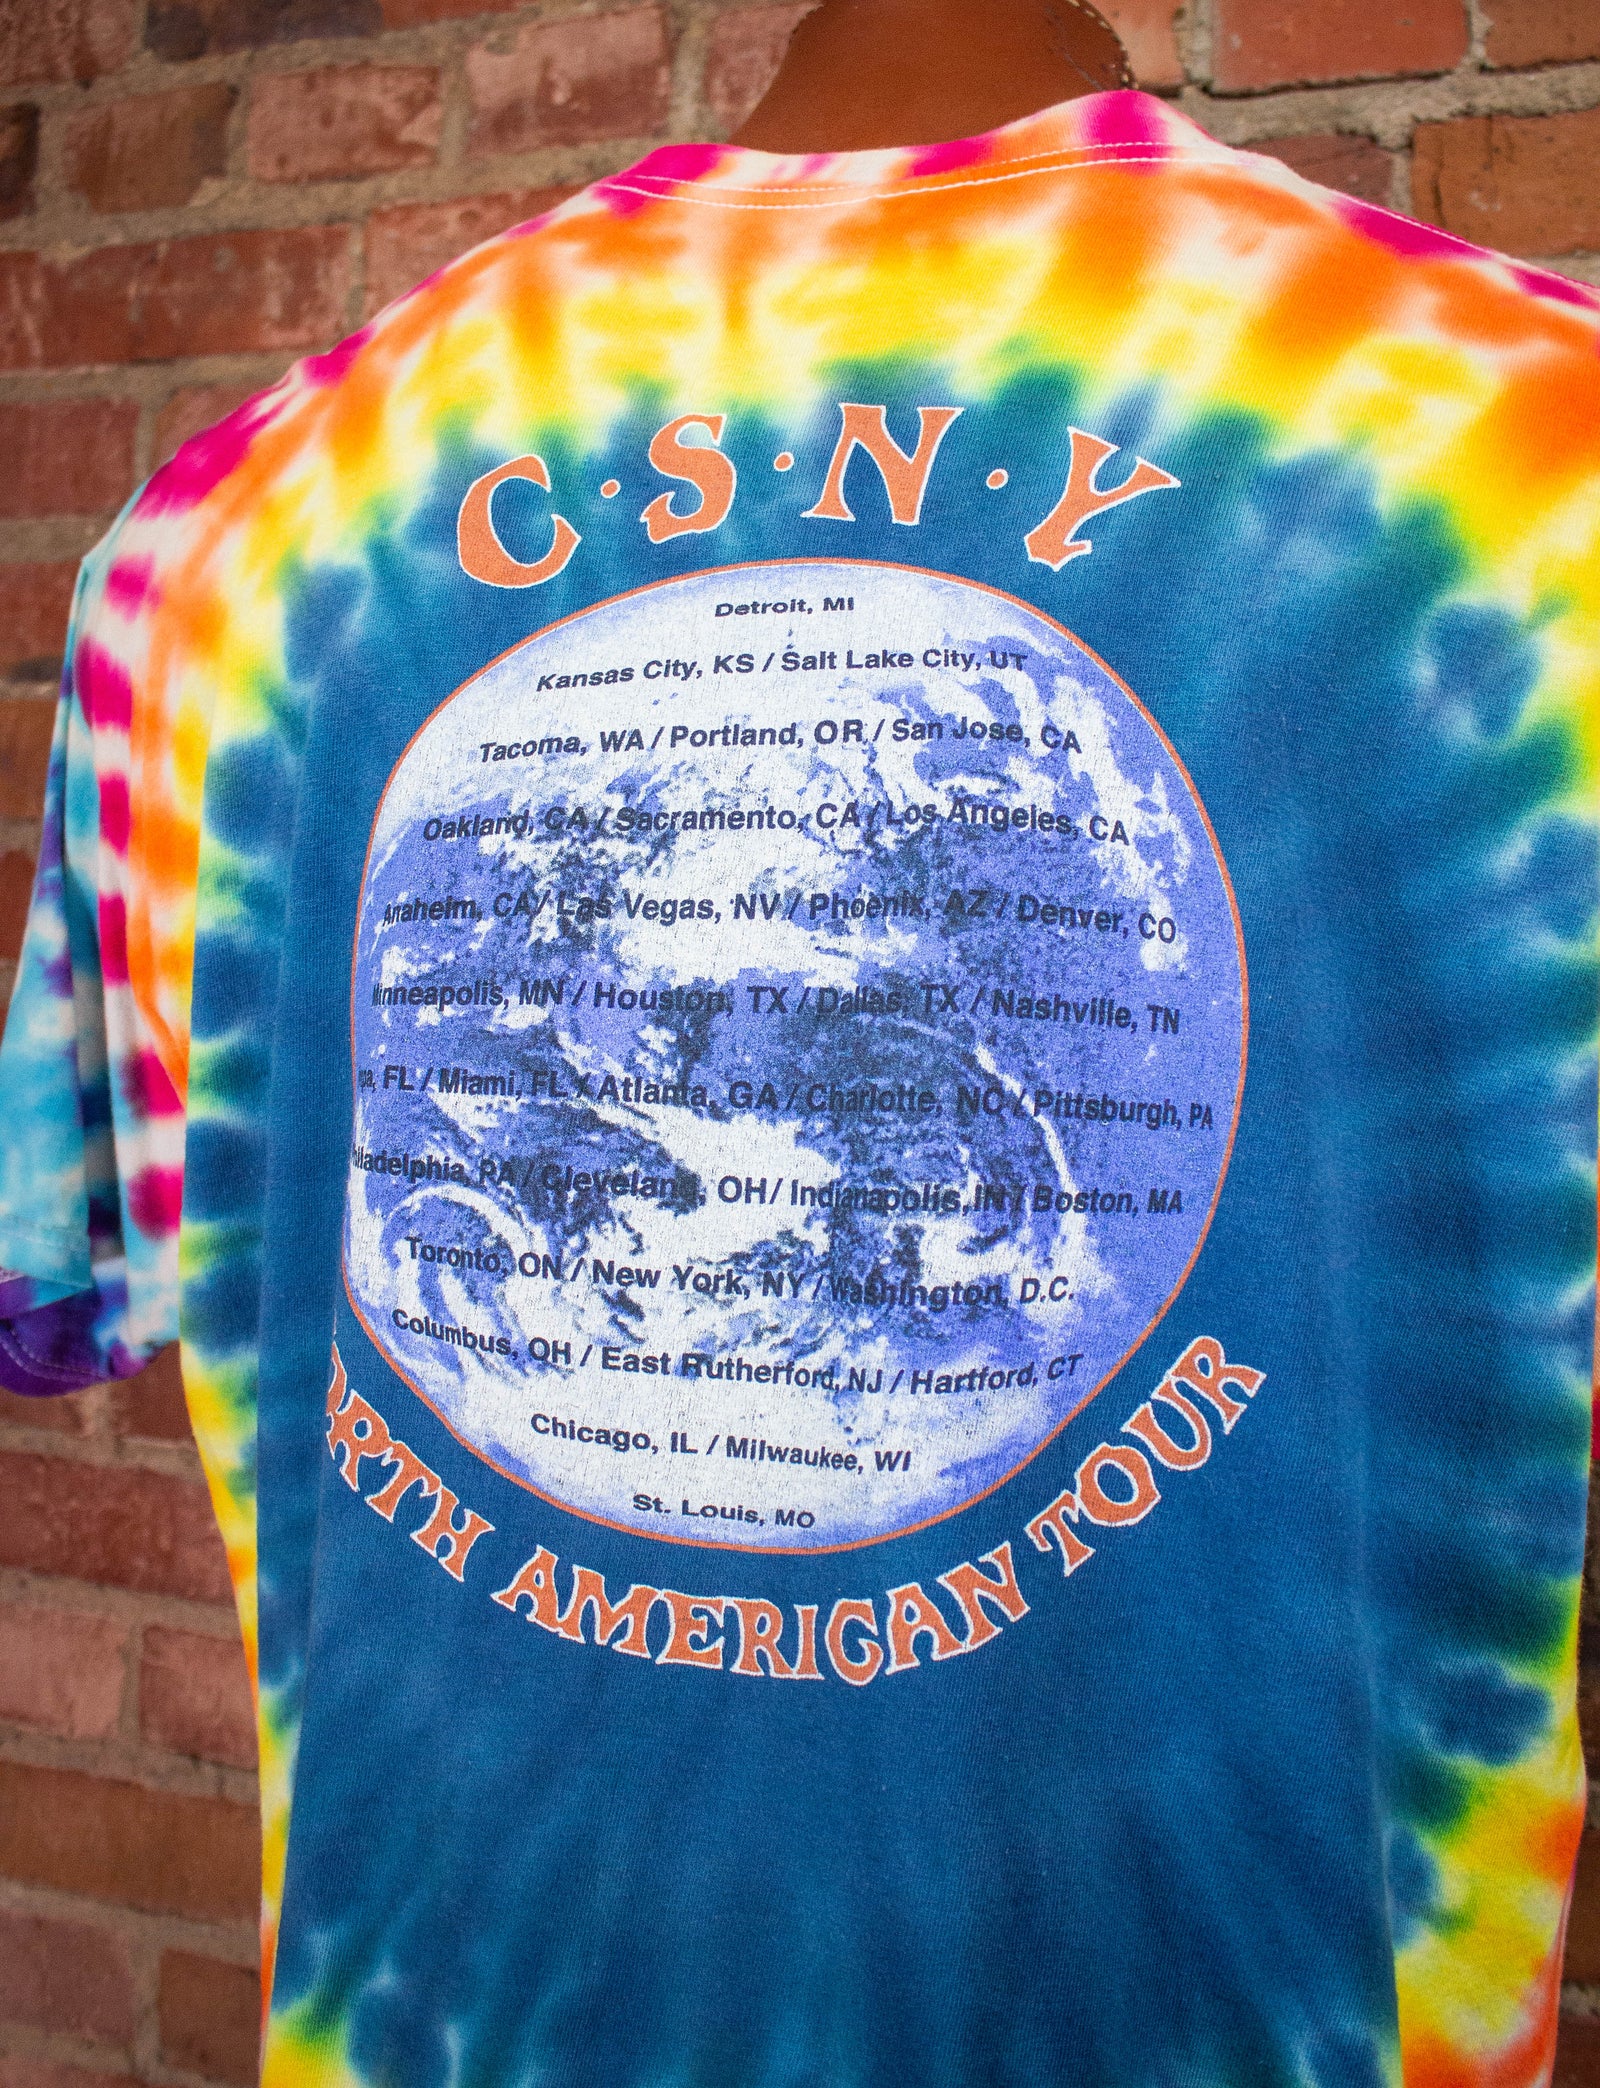 Vintage Crosby Stills Nash & Young Tie Dye Concert T Shirt 2000 XL